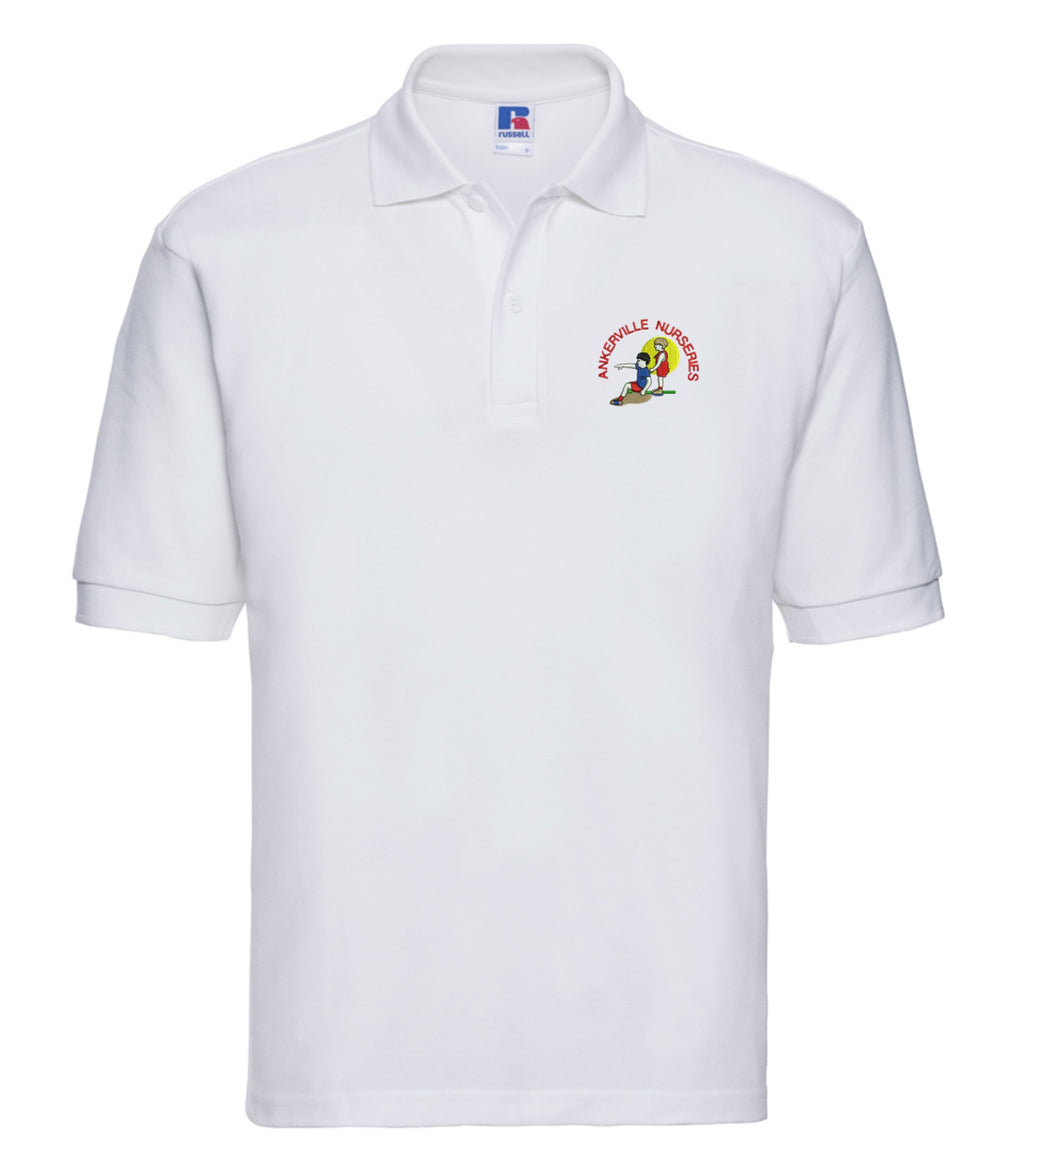 Ankerville Nursery Polo Shirt